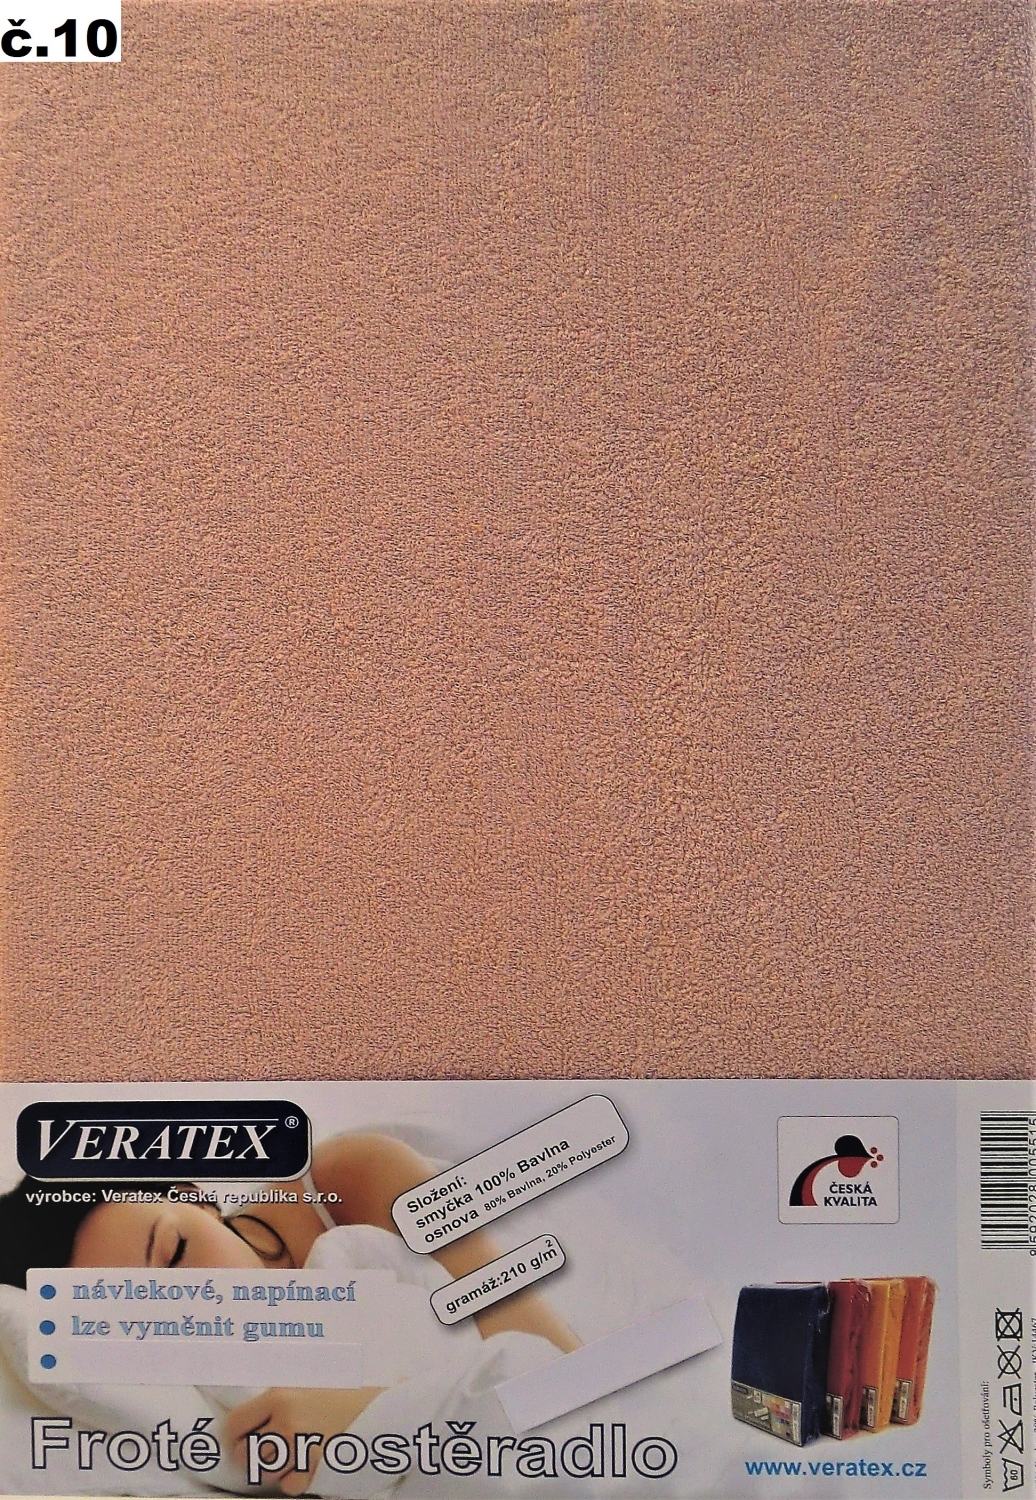 Veratex Froté prostěradlo 140x220/16 cm (č.10-starorůžová)